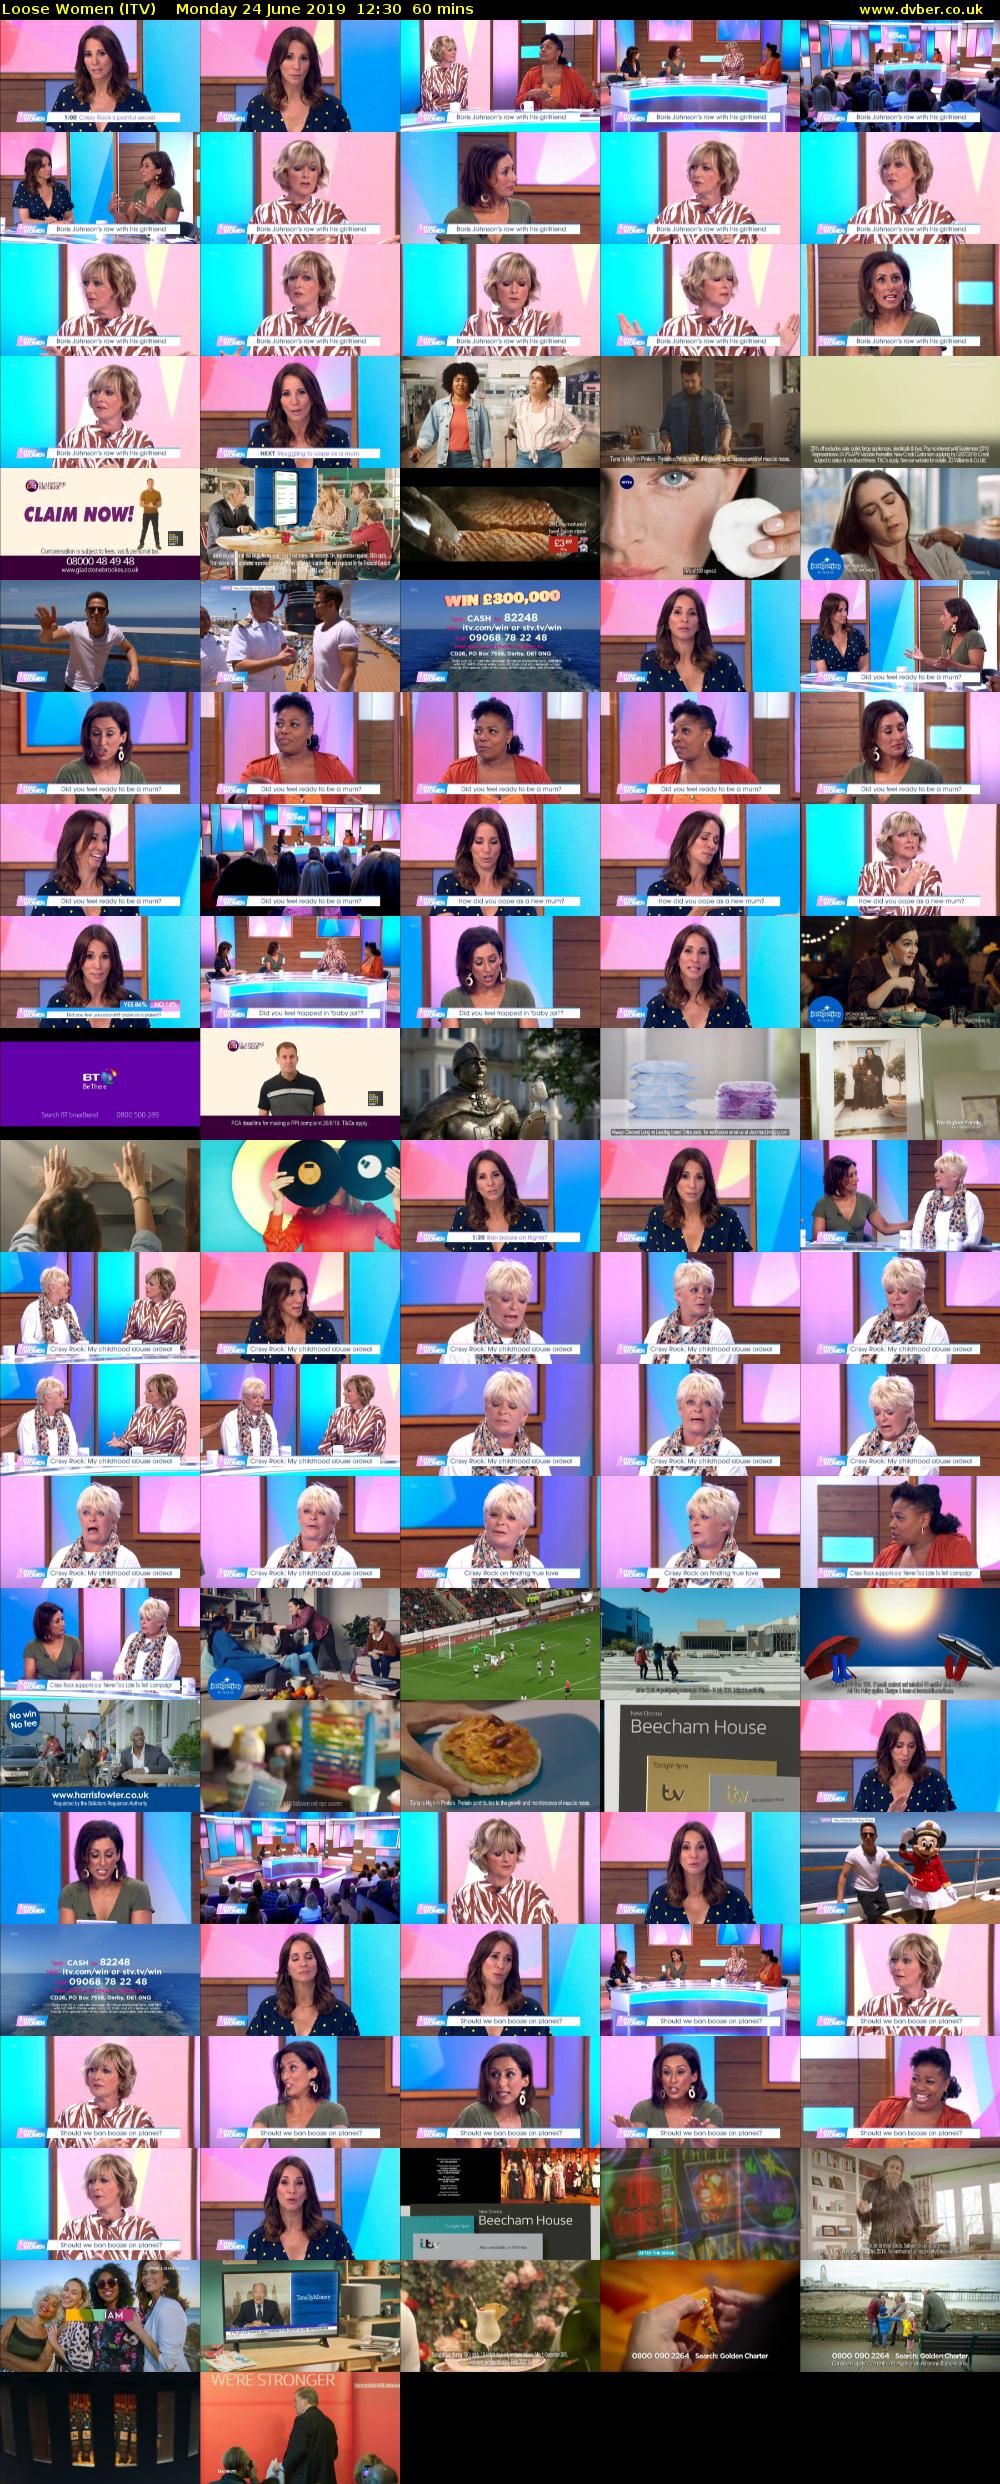 Loose Women (ITV) Monday 24 June 2019 12:30 - 13:30